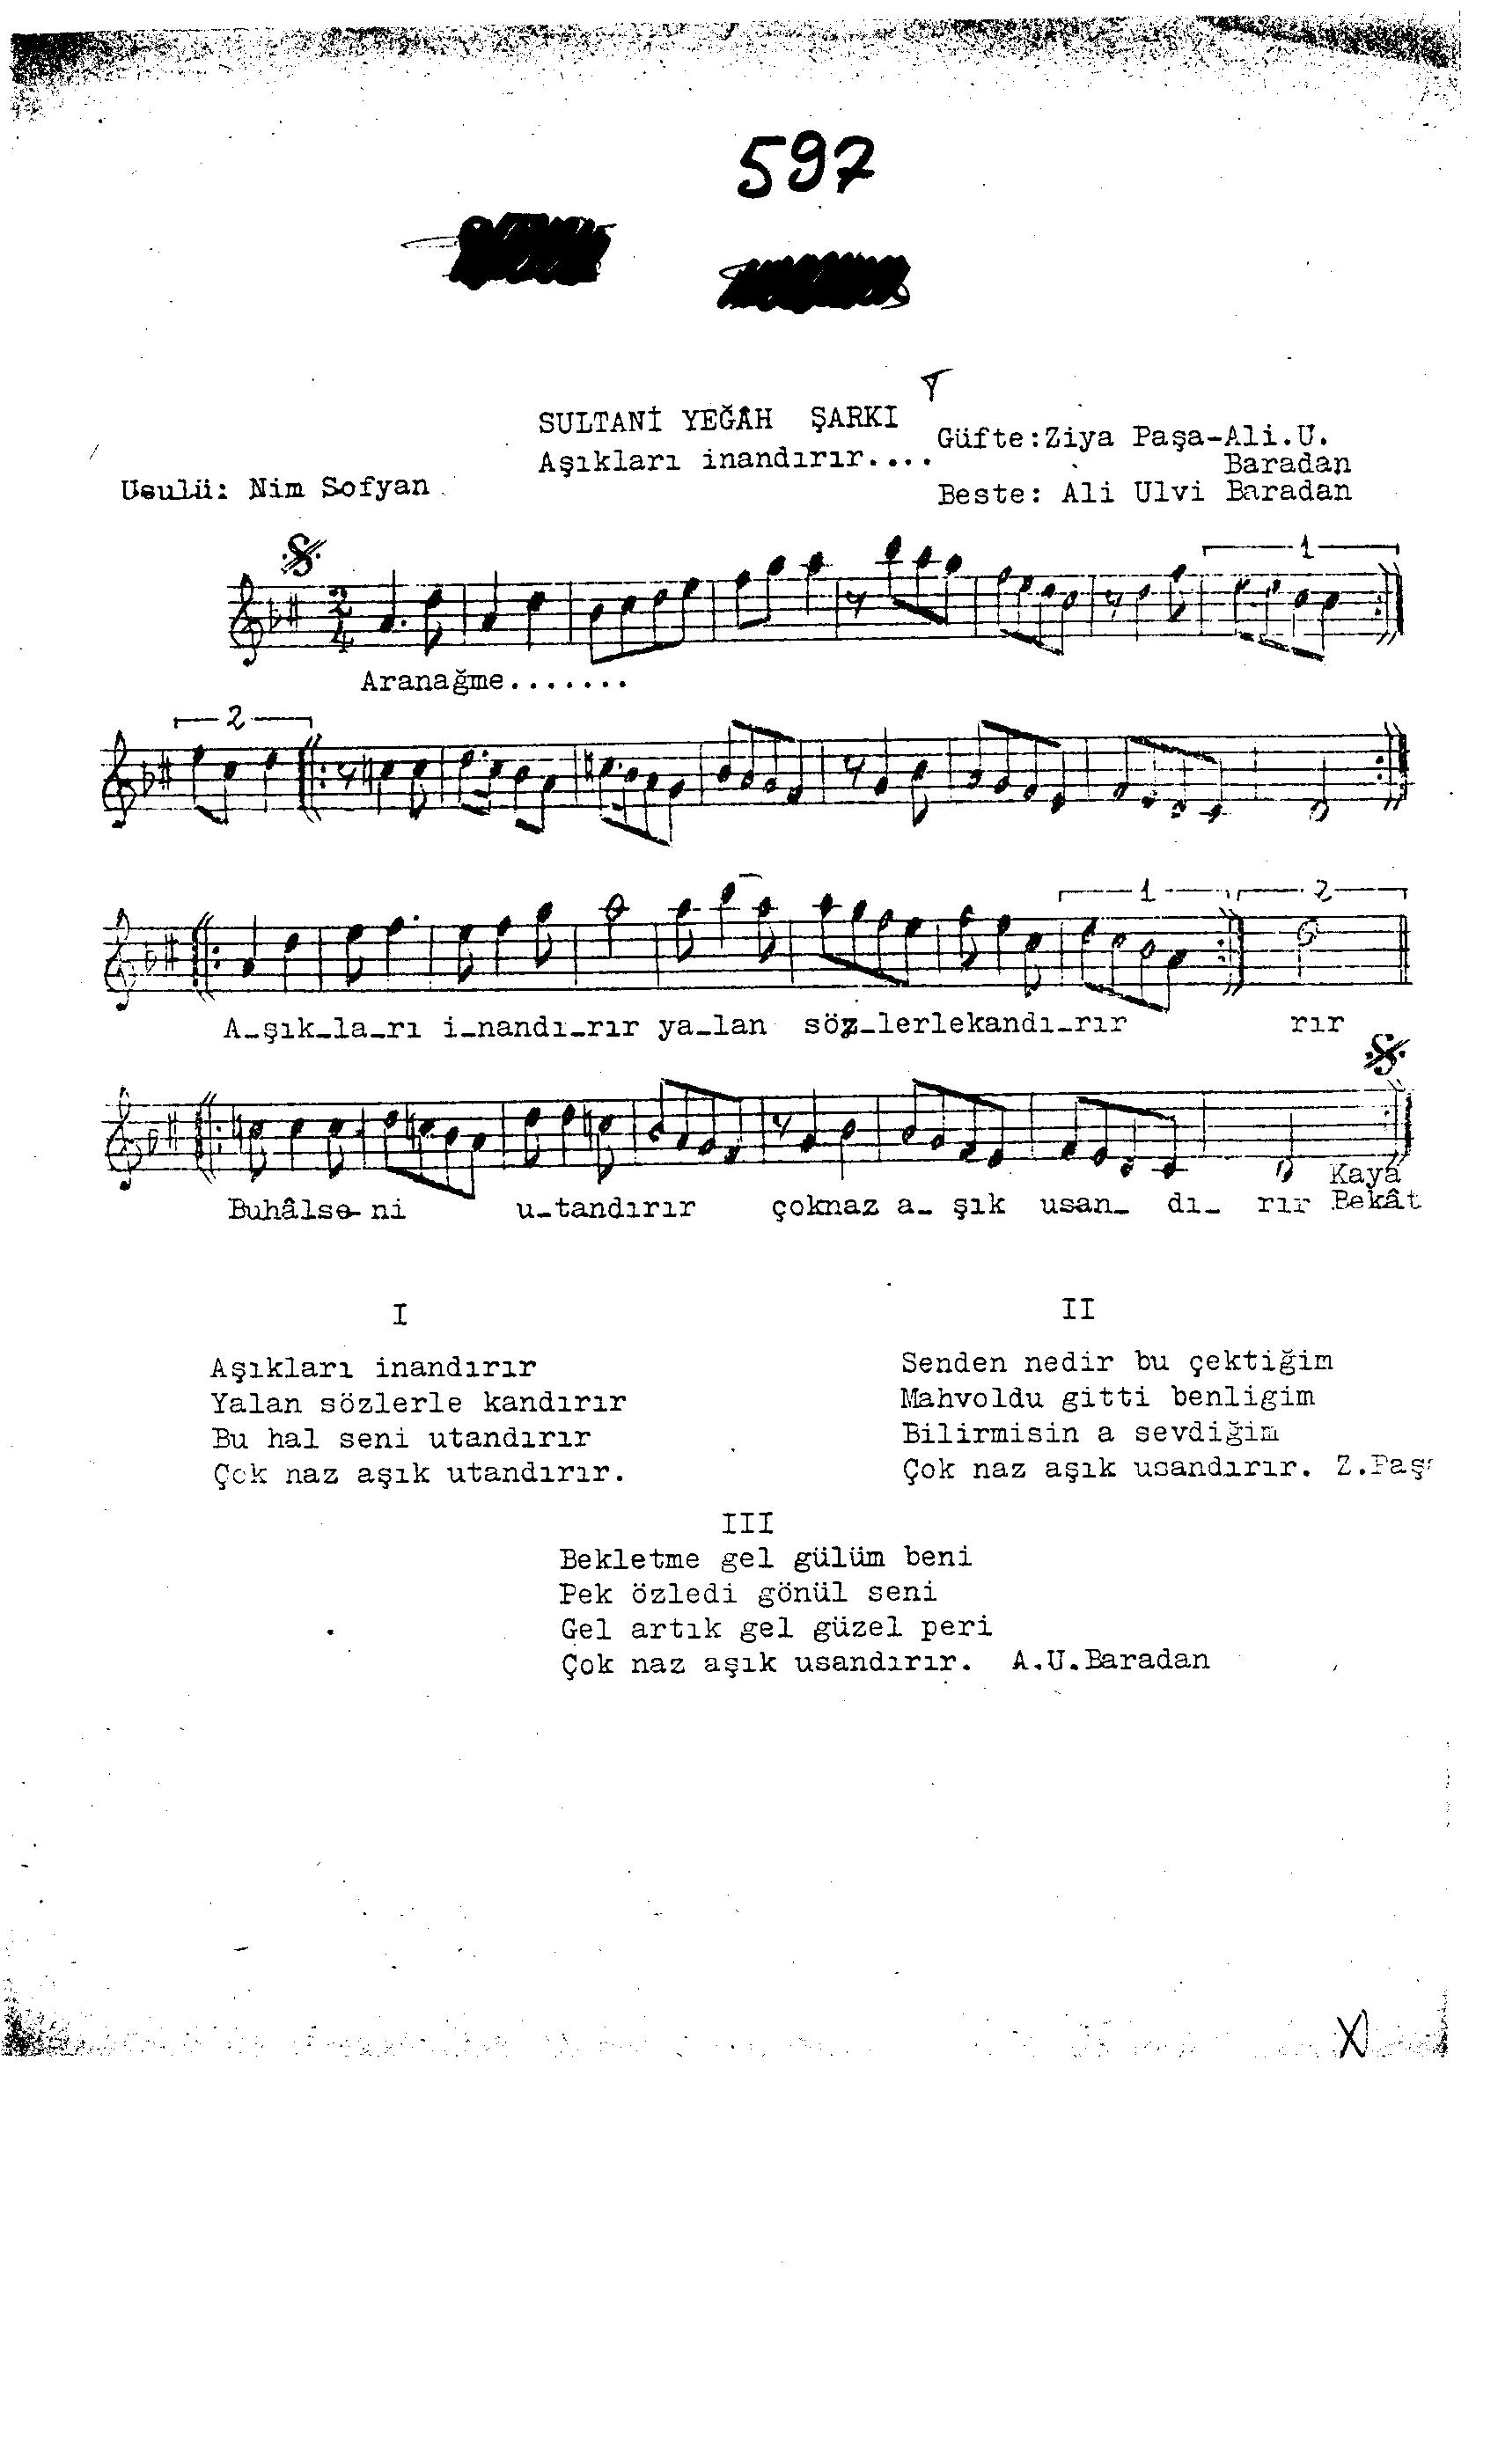 Sultânî-Yegâh - Şarkı - Ali Ulvi Baradan - Sayfa 1